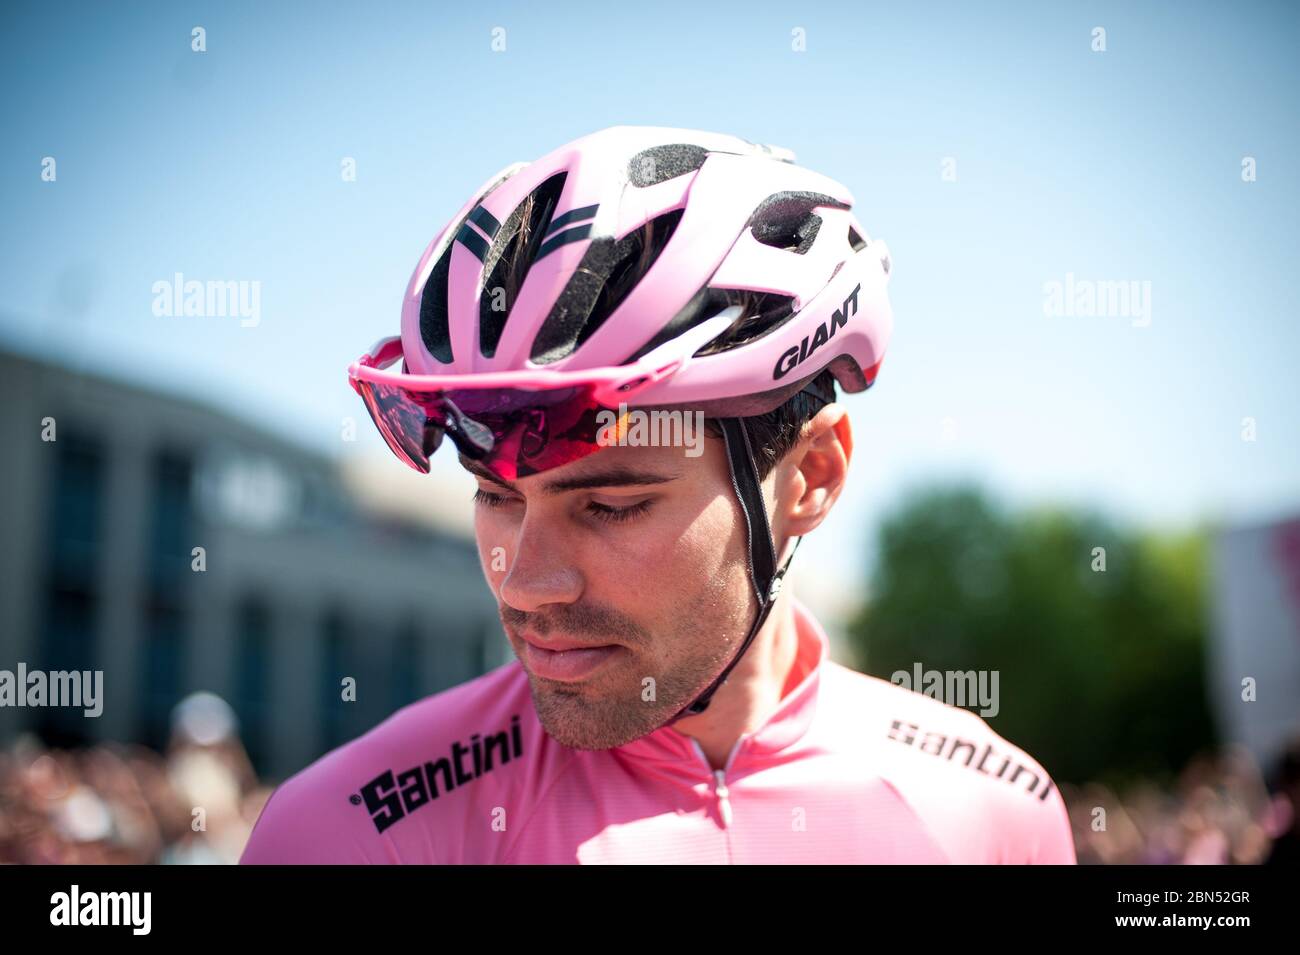 2016 Giro d'Italia. Tom Dumoulin in der Leaders rosa Trikot. Foto von Simon Gill. Stockfoto